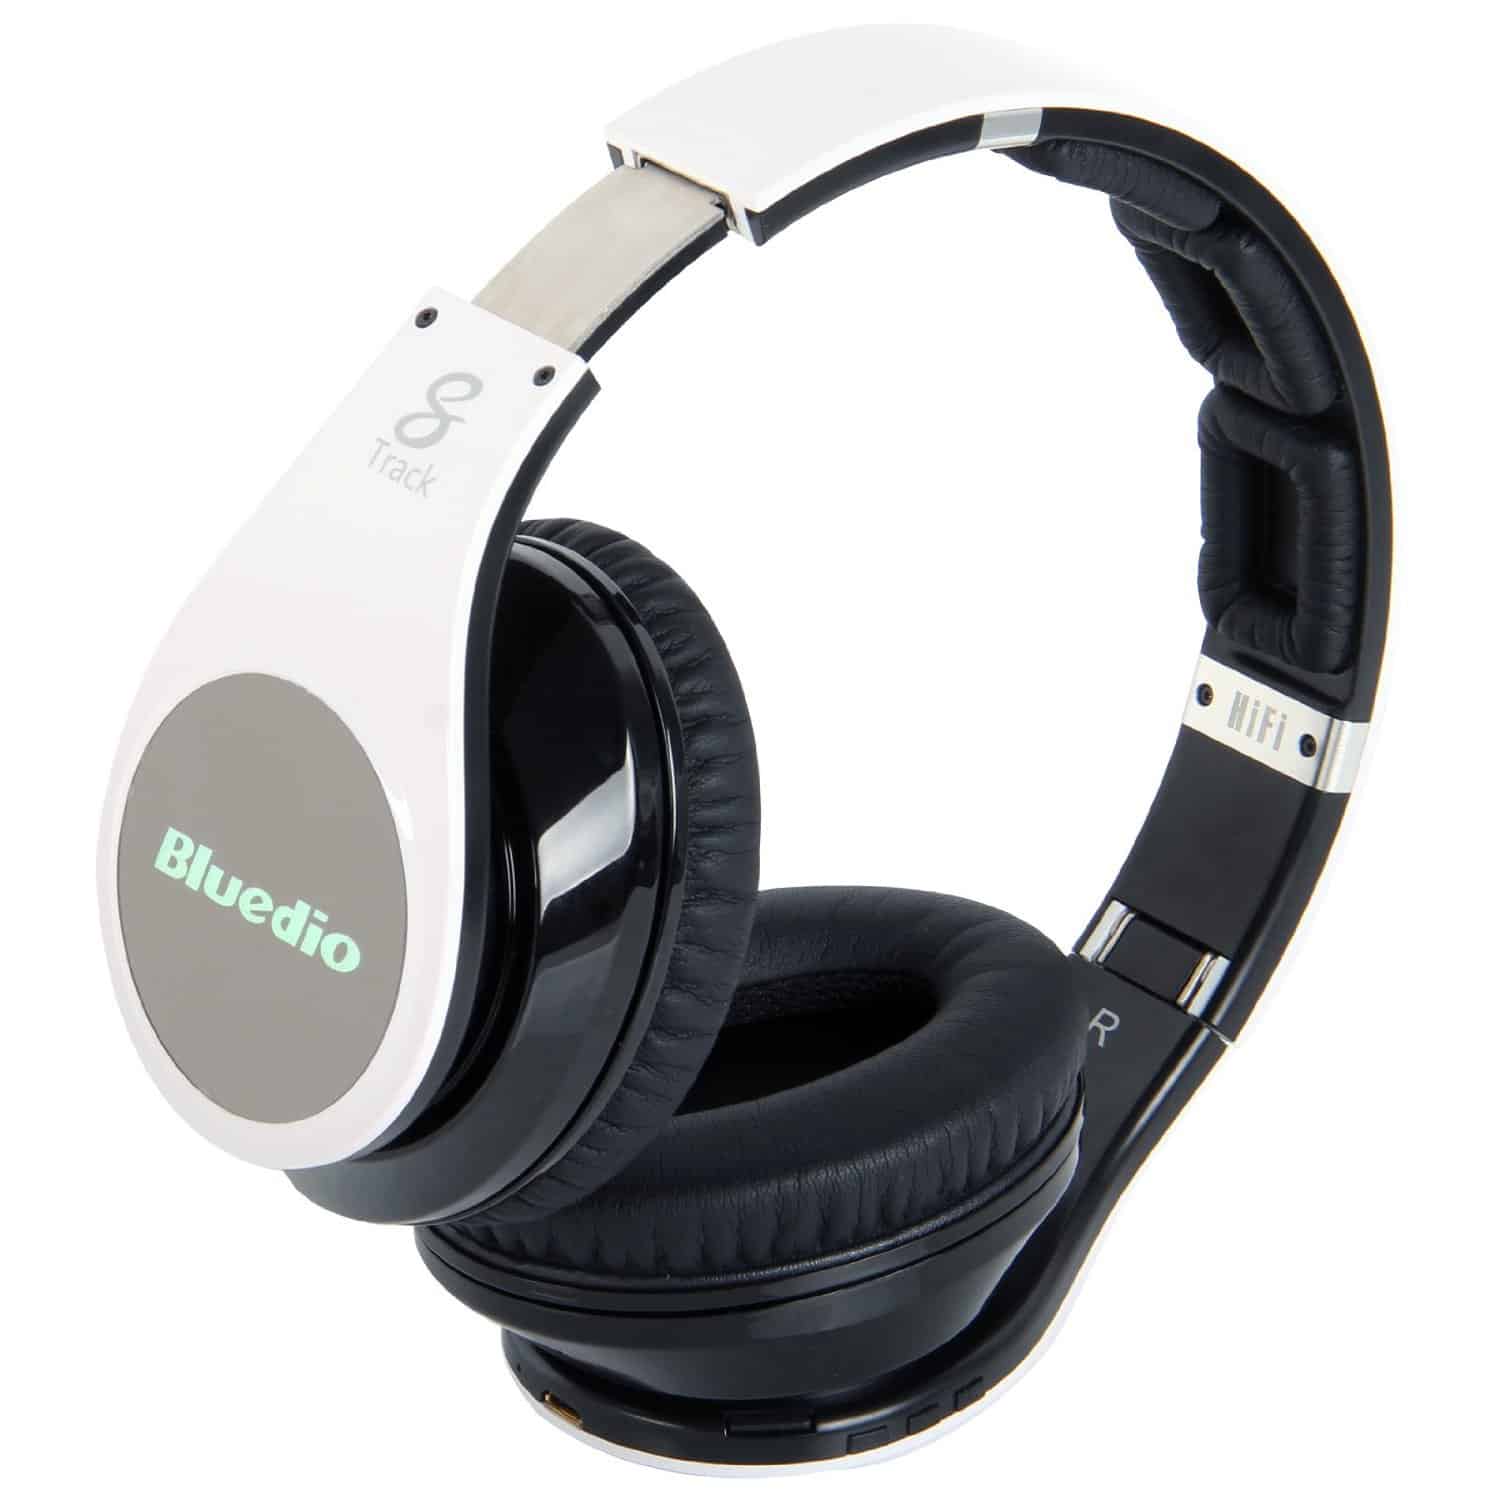 Bludio R headphones